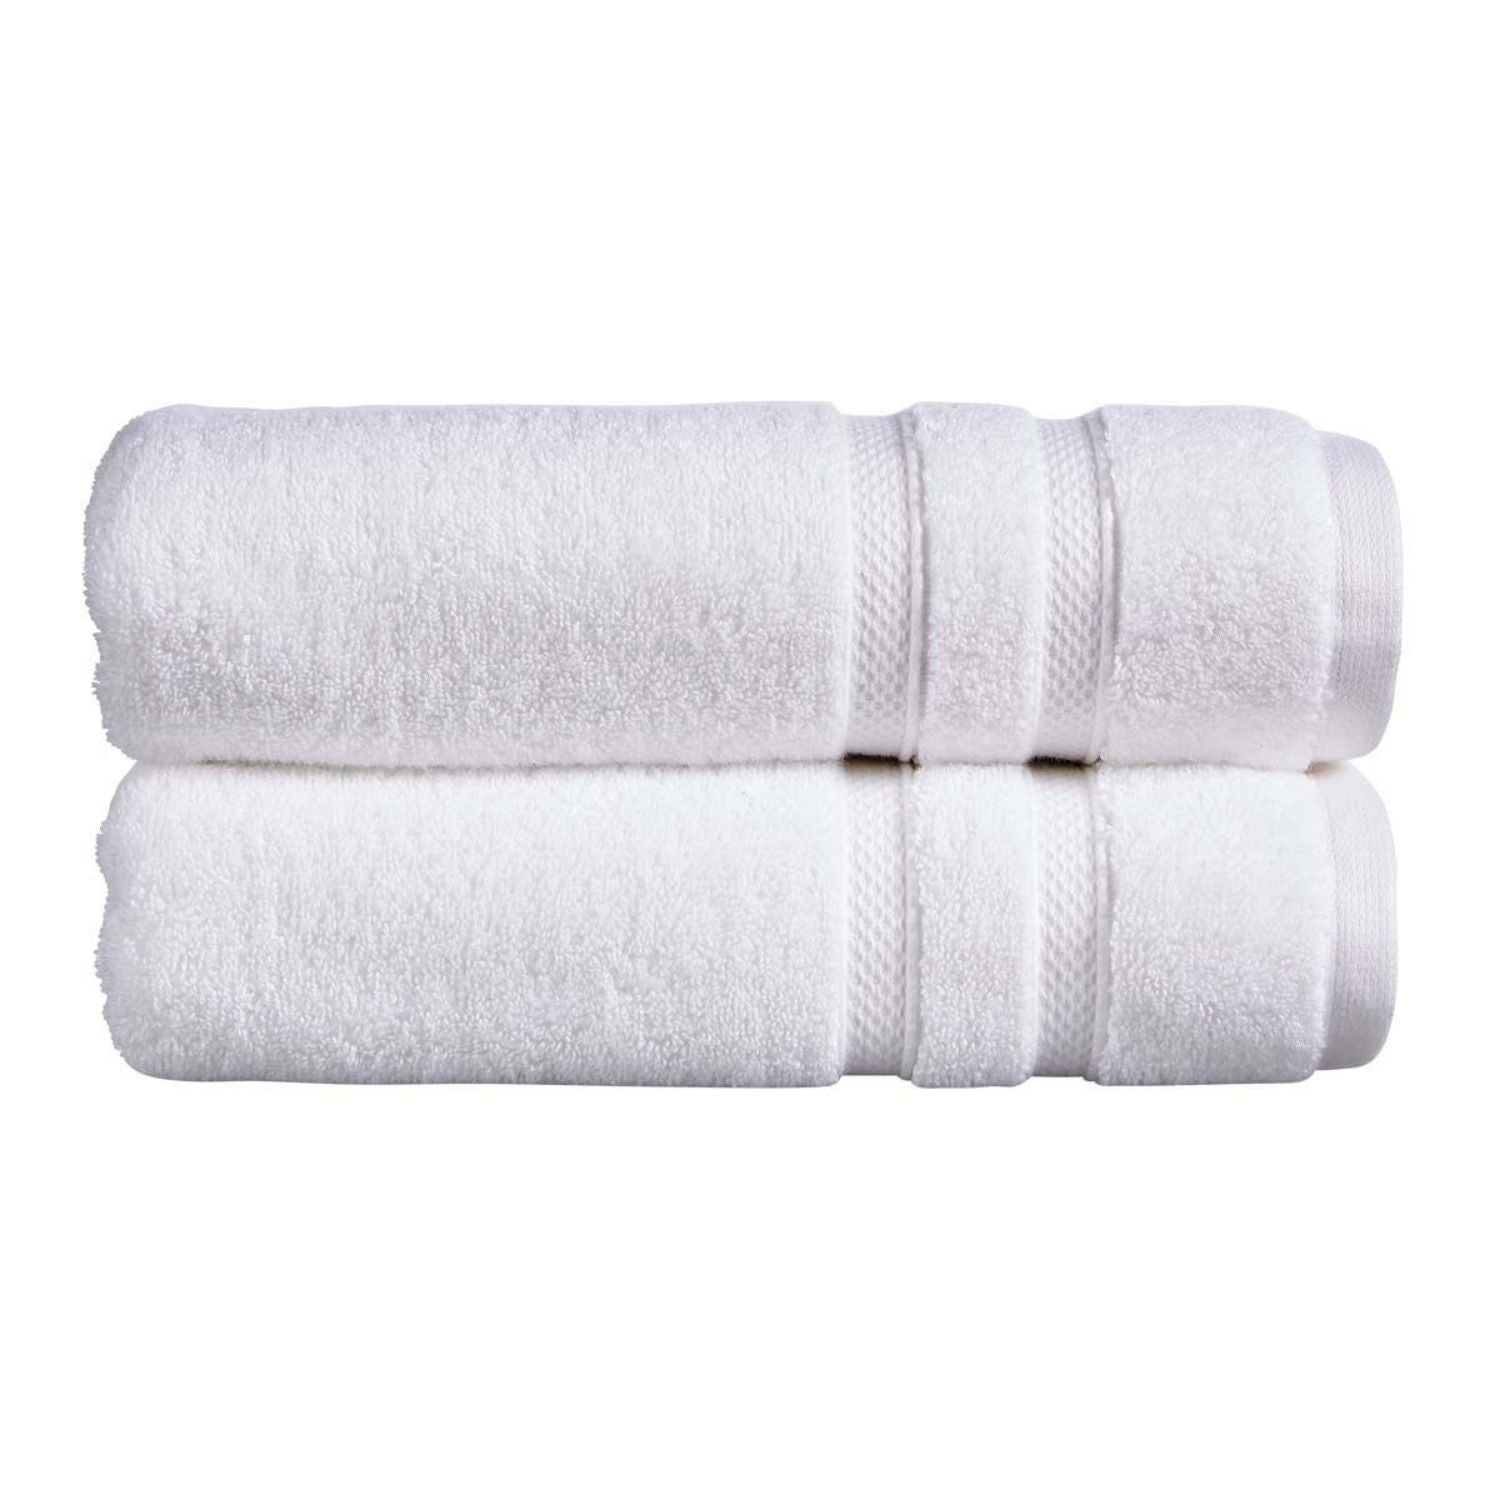 Christy Chroma Bath Towel - White 1 Shaws Department Stores